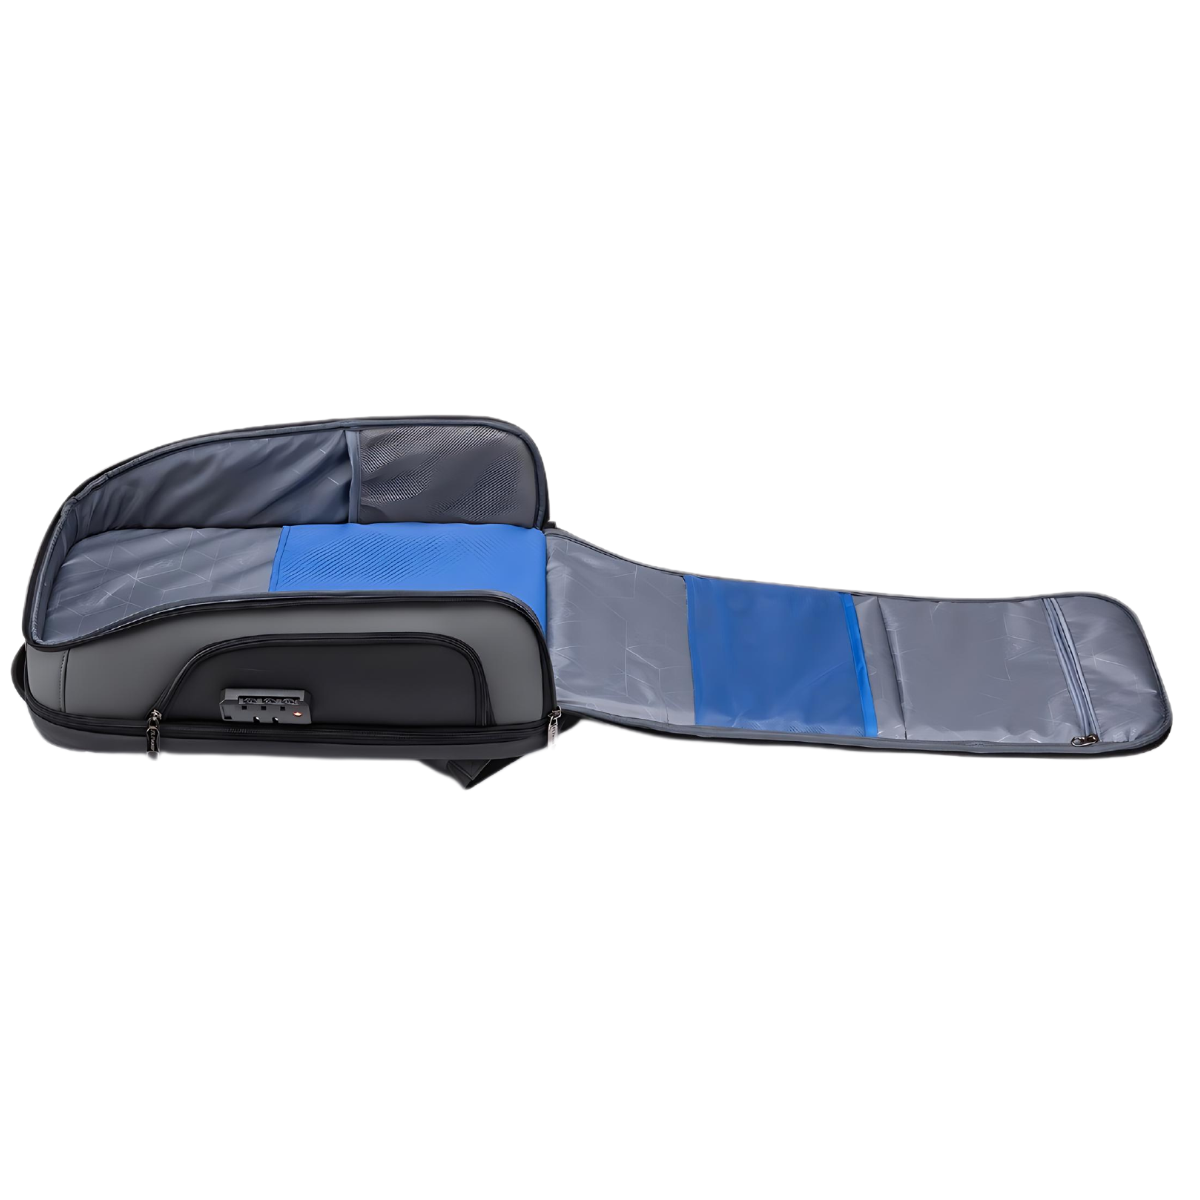 SecureTech Pro Backpack